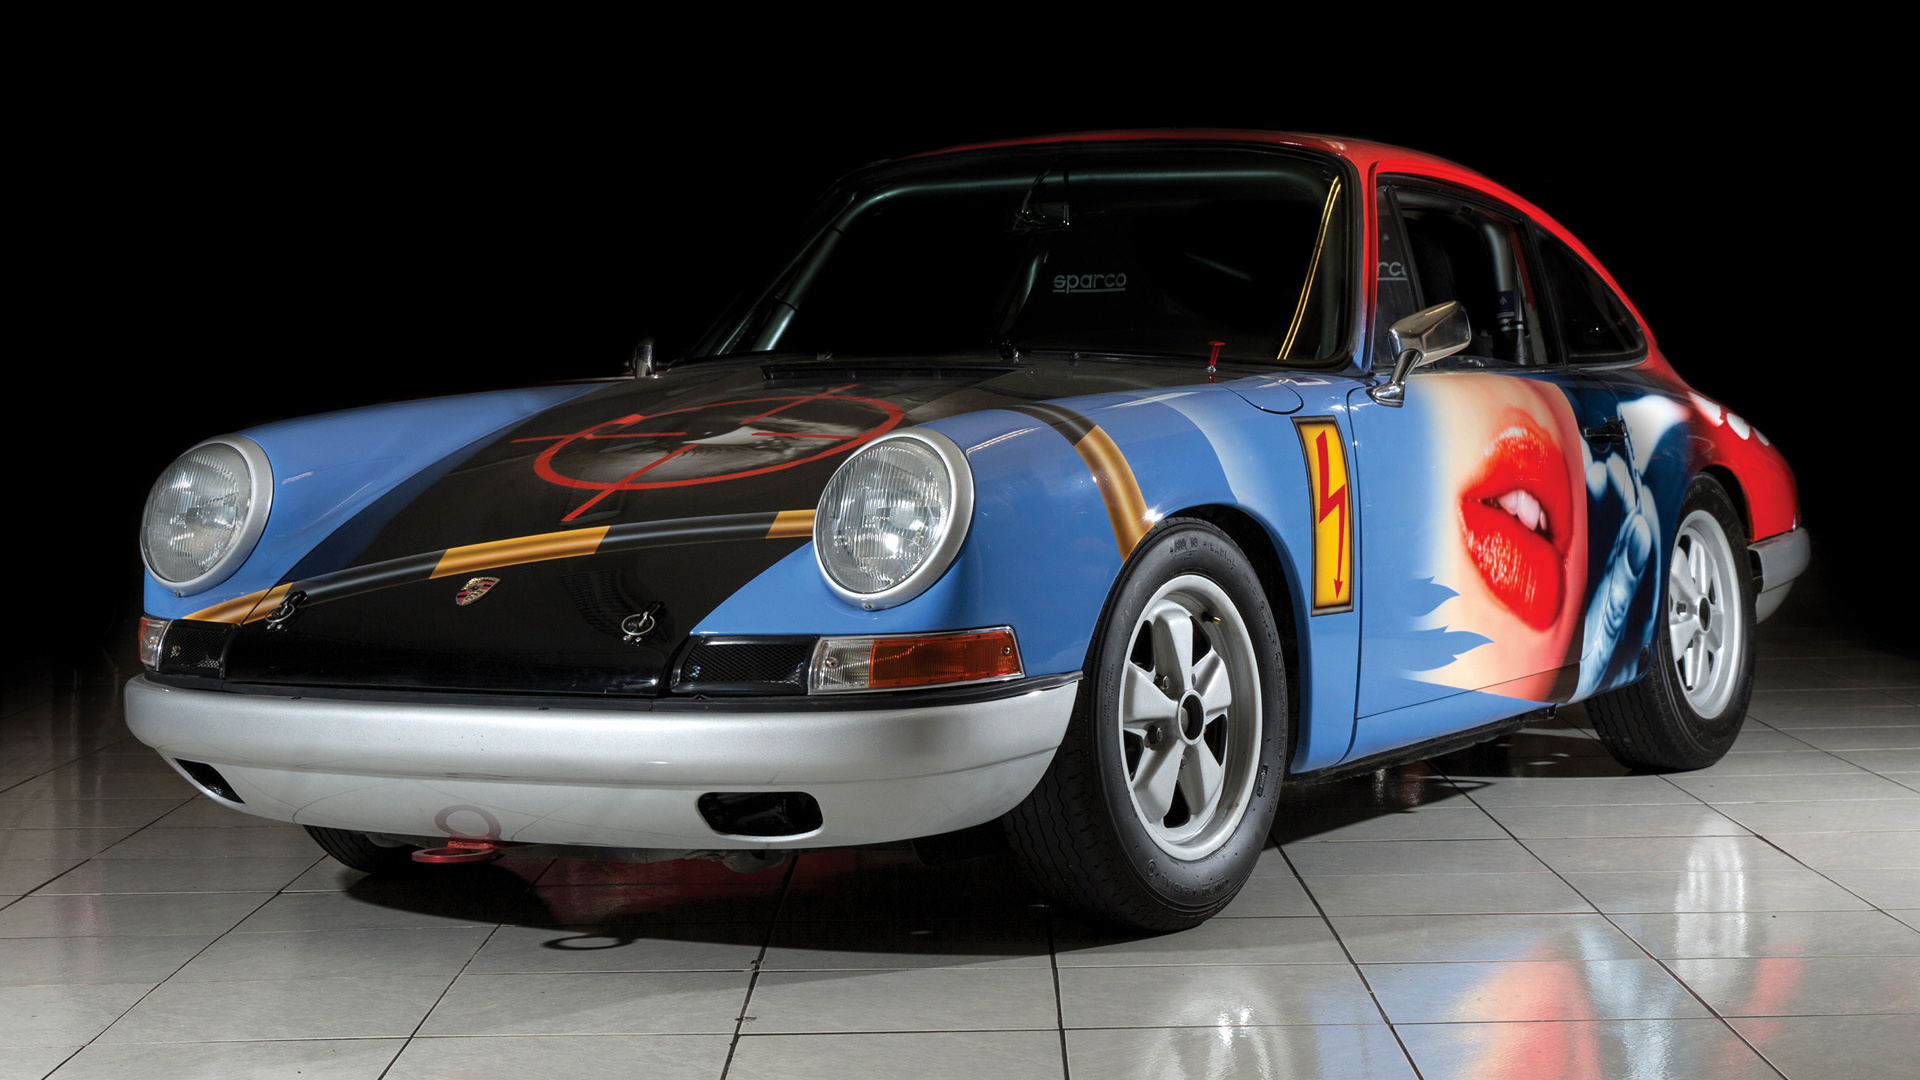 1965 Porsche 911 007 Art Car by Peter Klasen - Wallpapers and HD Images |  Car Pixel